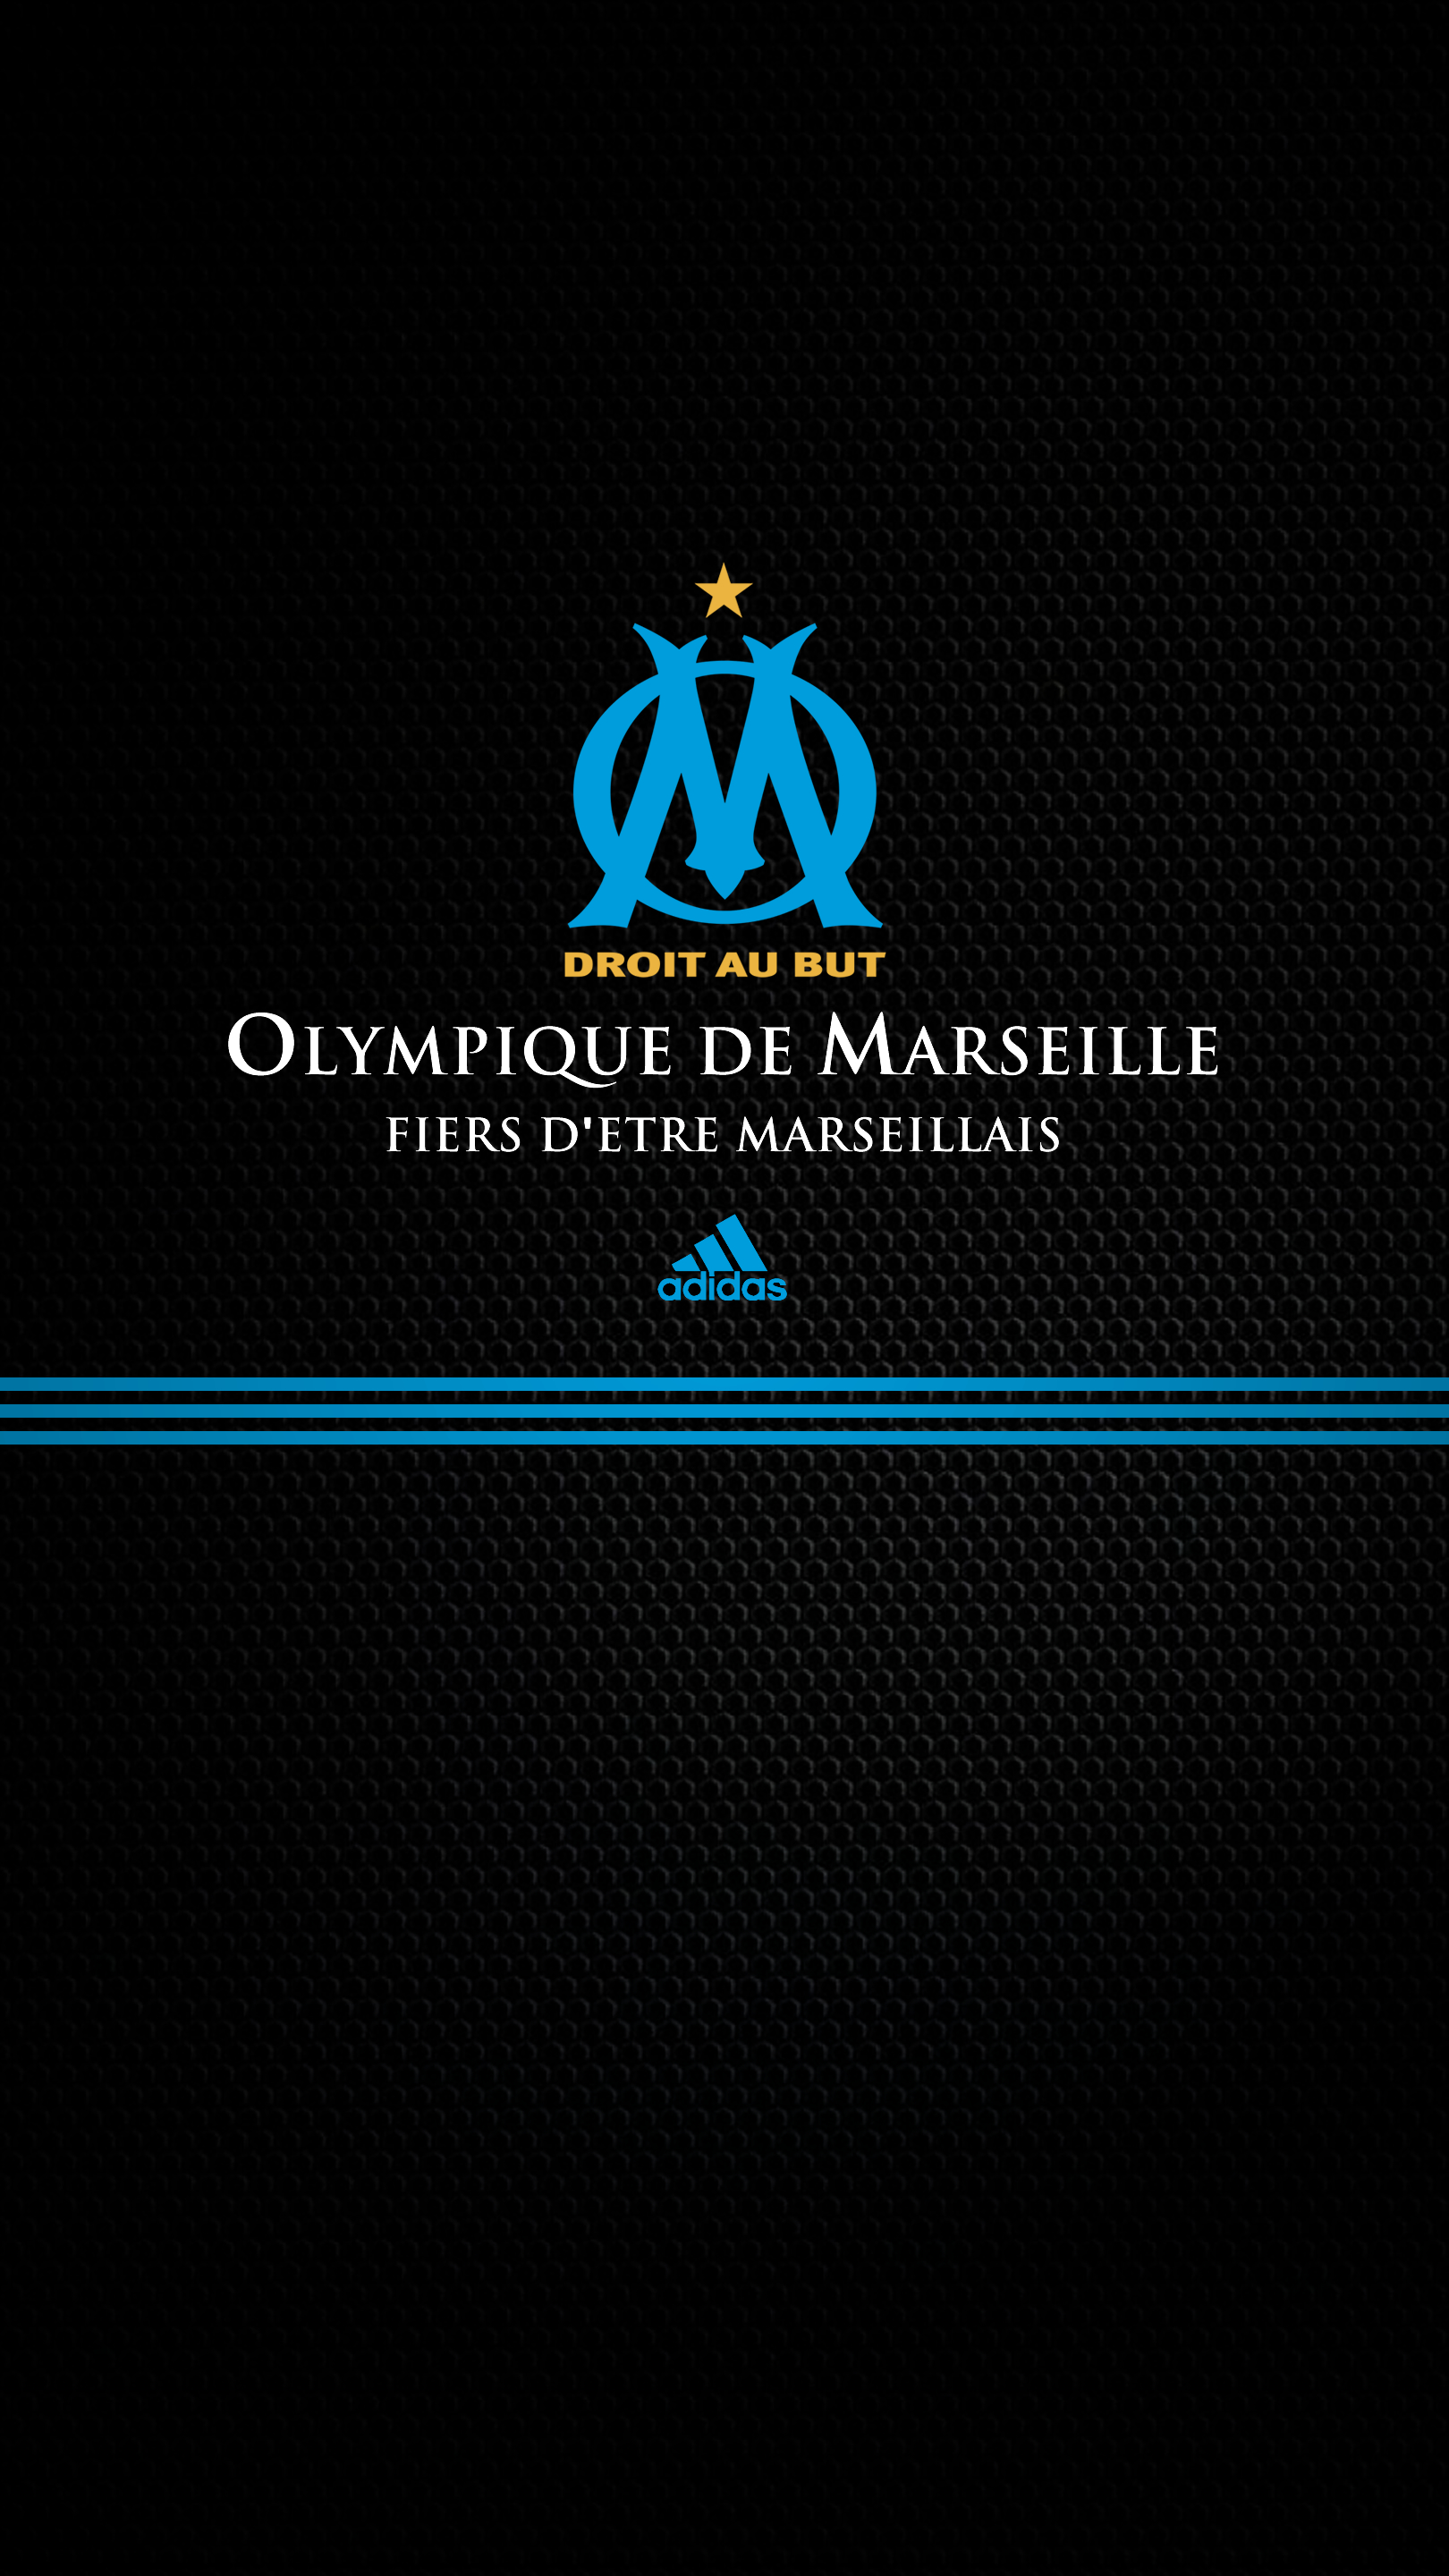 Mobile Olympique De Marseille Wallpaper Full HD Pictures